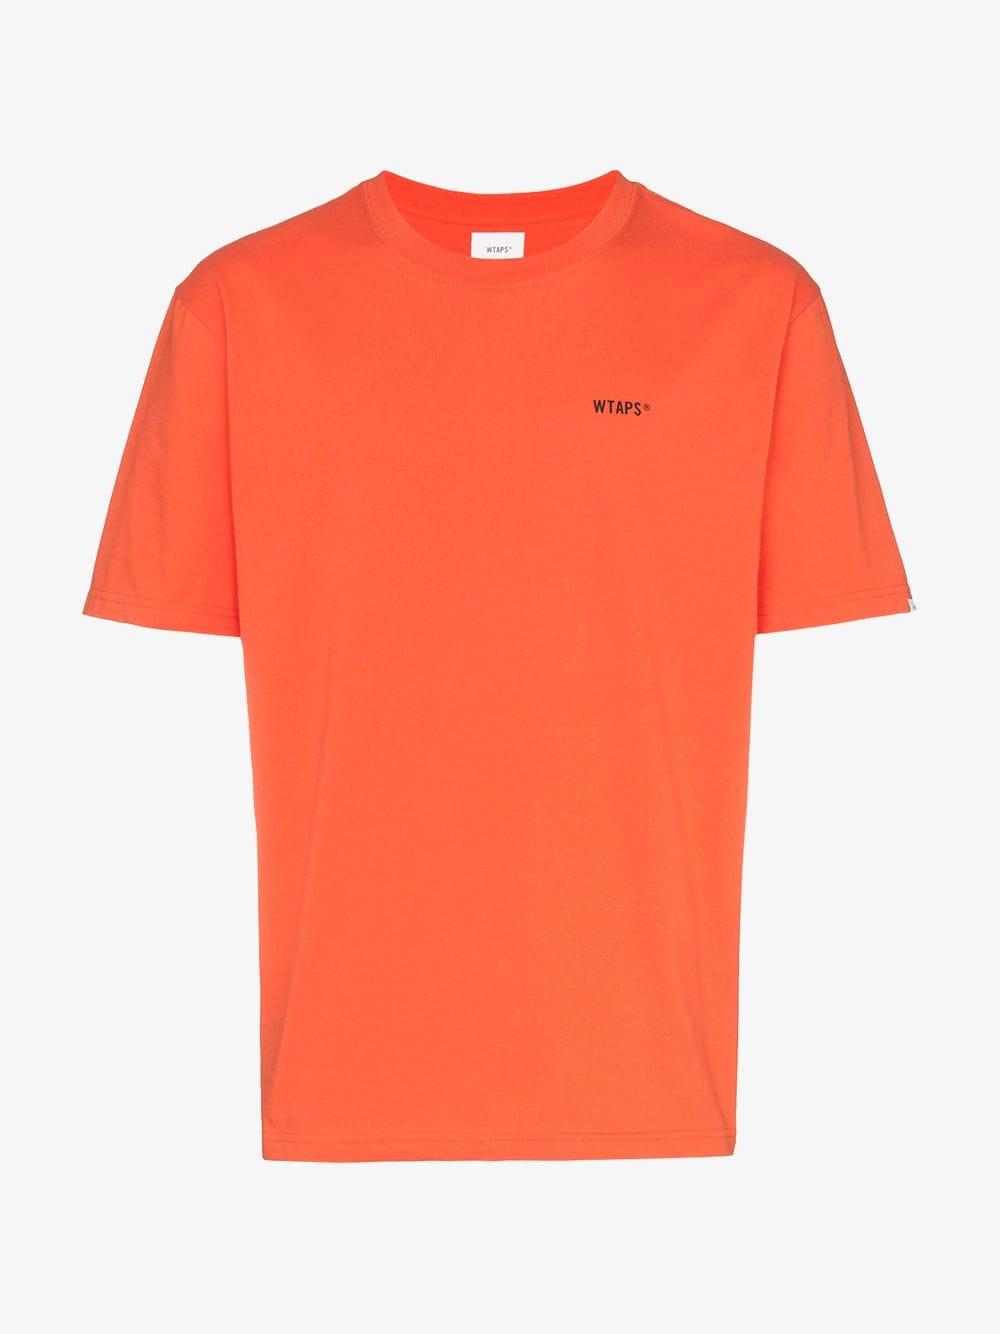 WTAPS Cotton Urban Territory Logo Print T-shirt in Orange for Men - Lyst